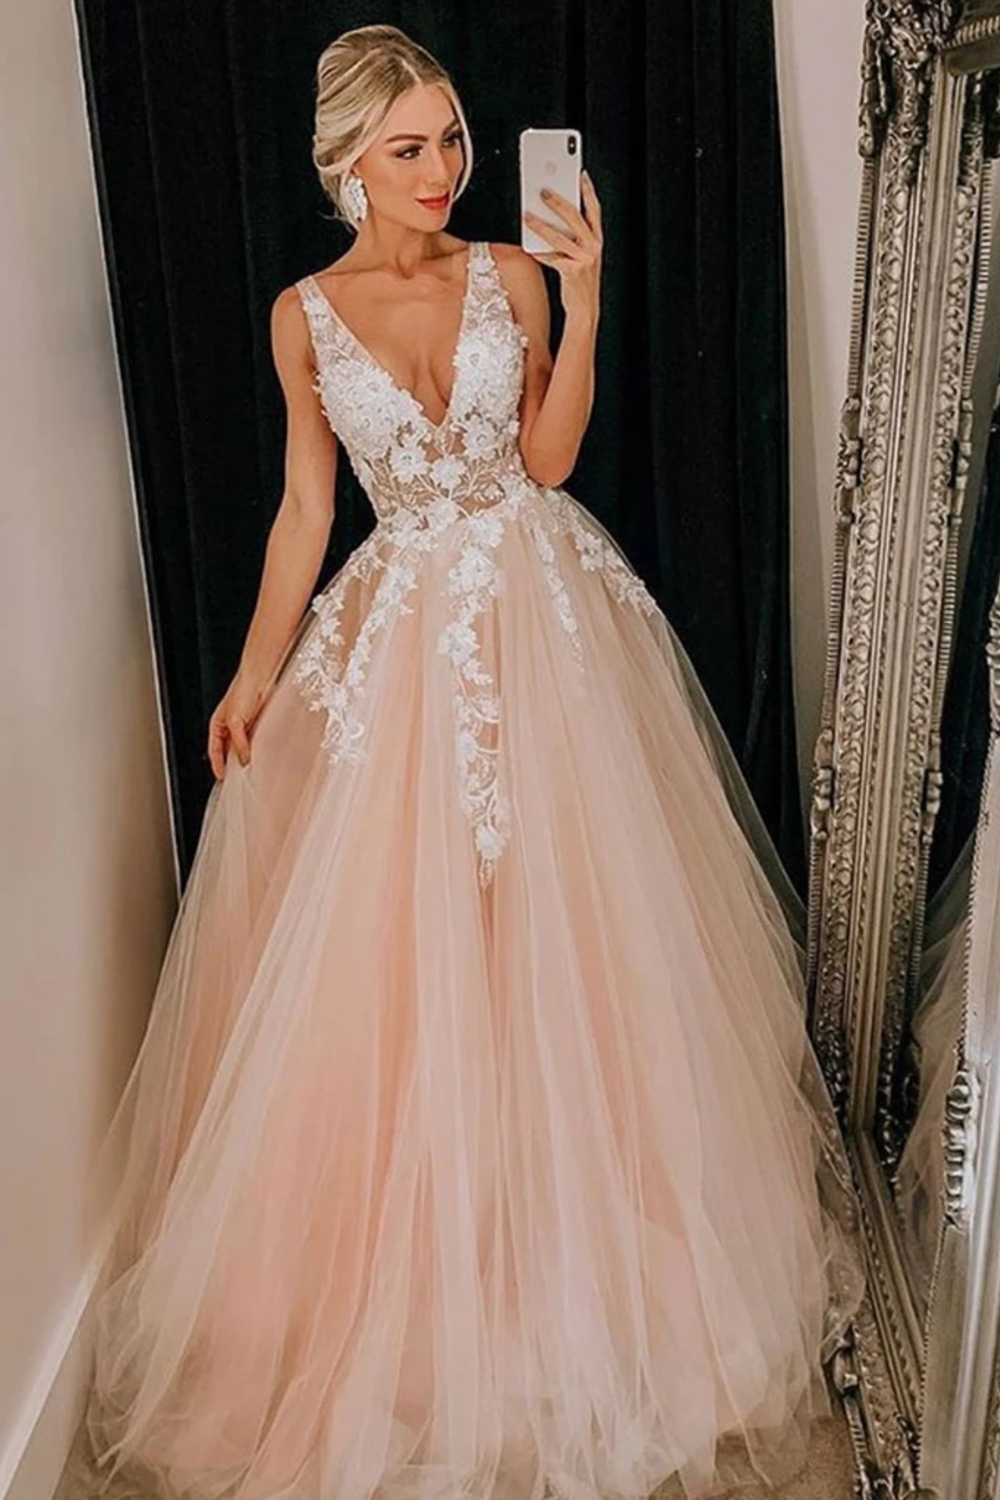 Puffy Deep V Neck Sleeveless Tulle Prom Dresses, A Line Appliqued Floor Length Party Dress US$ 179.00 AVPPJ7FHZZE - dresses-vip -   14 formal dress 2018 ideas